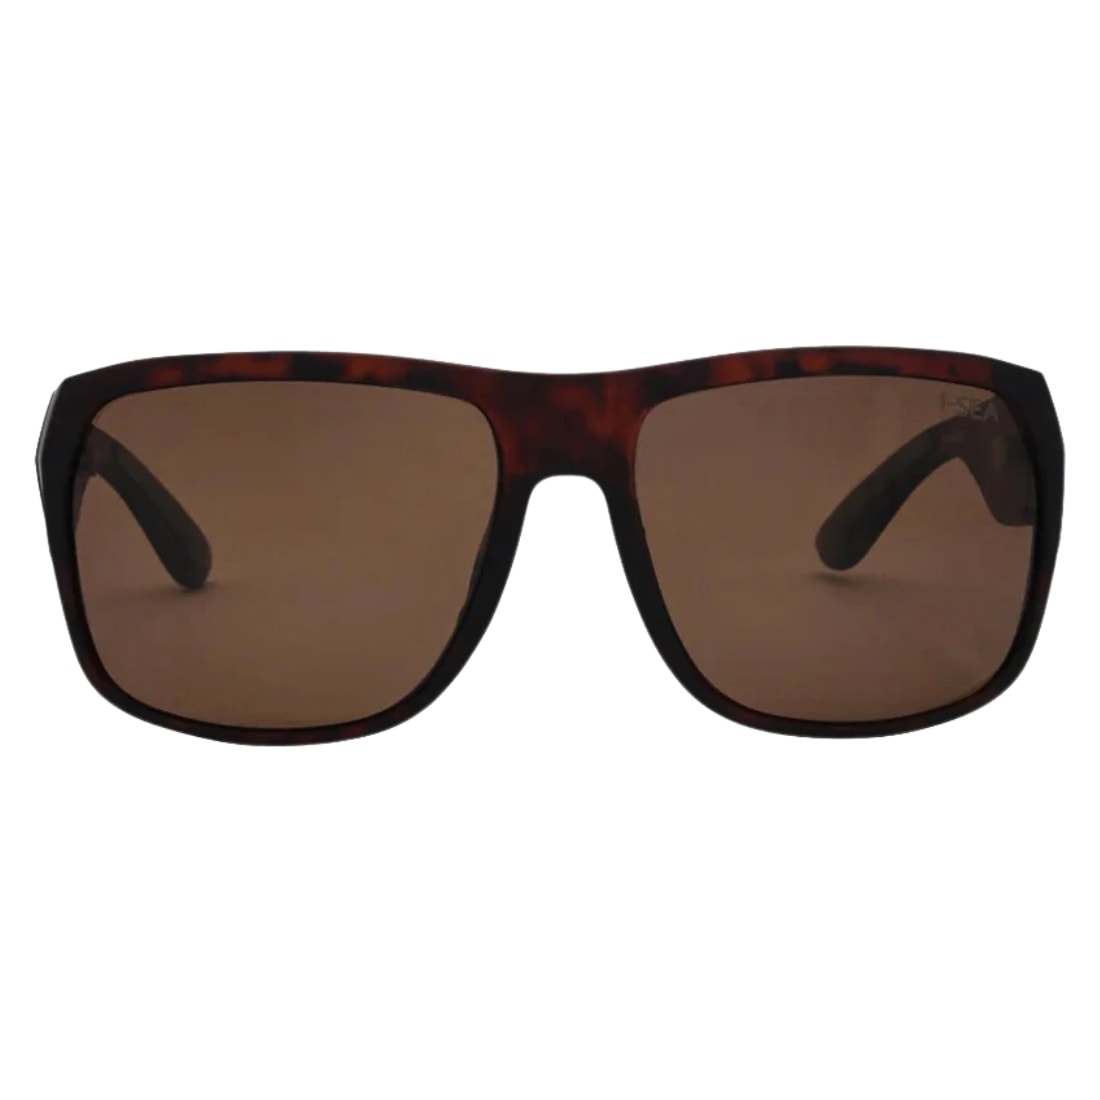 I-Sea Nick I Sunglasses - Tortoise/Brown Polarised - Square/Rectangular Sunglasses by I-Sea